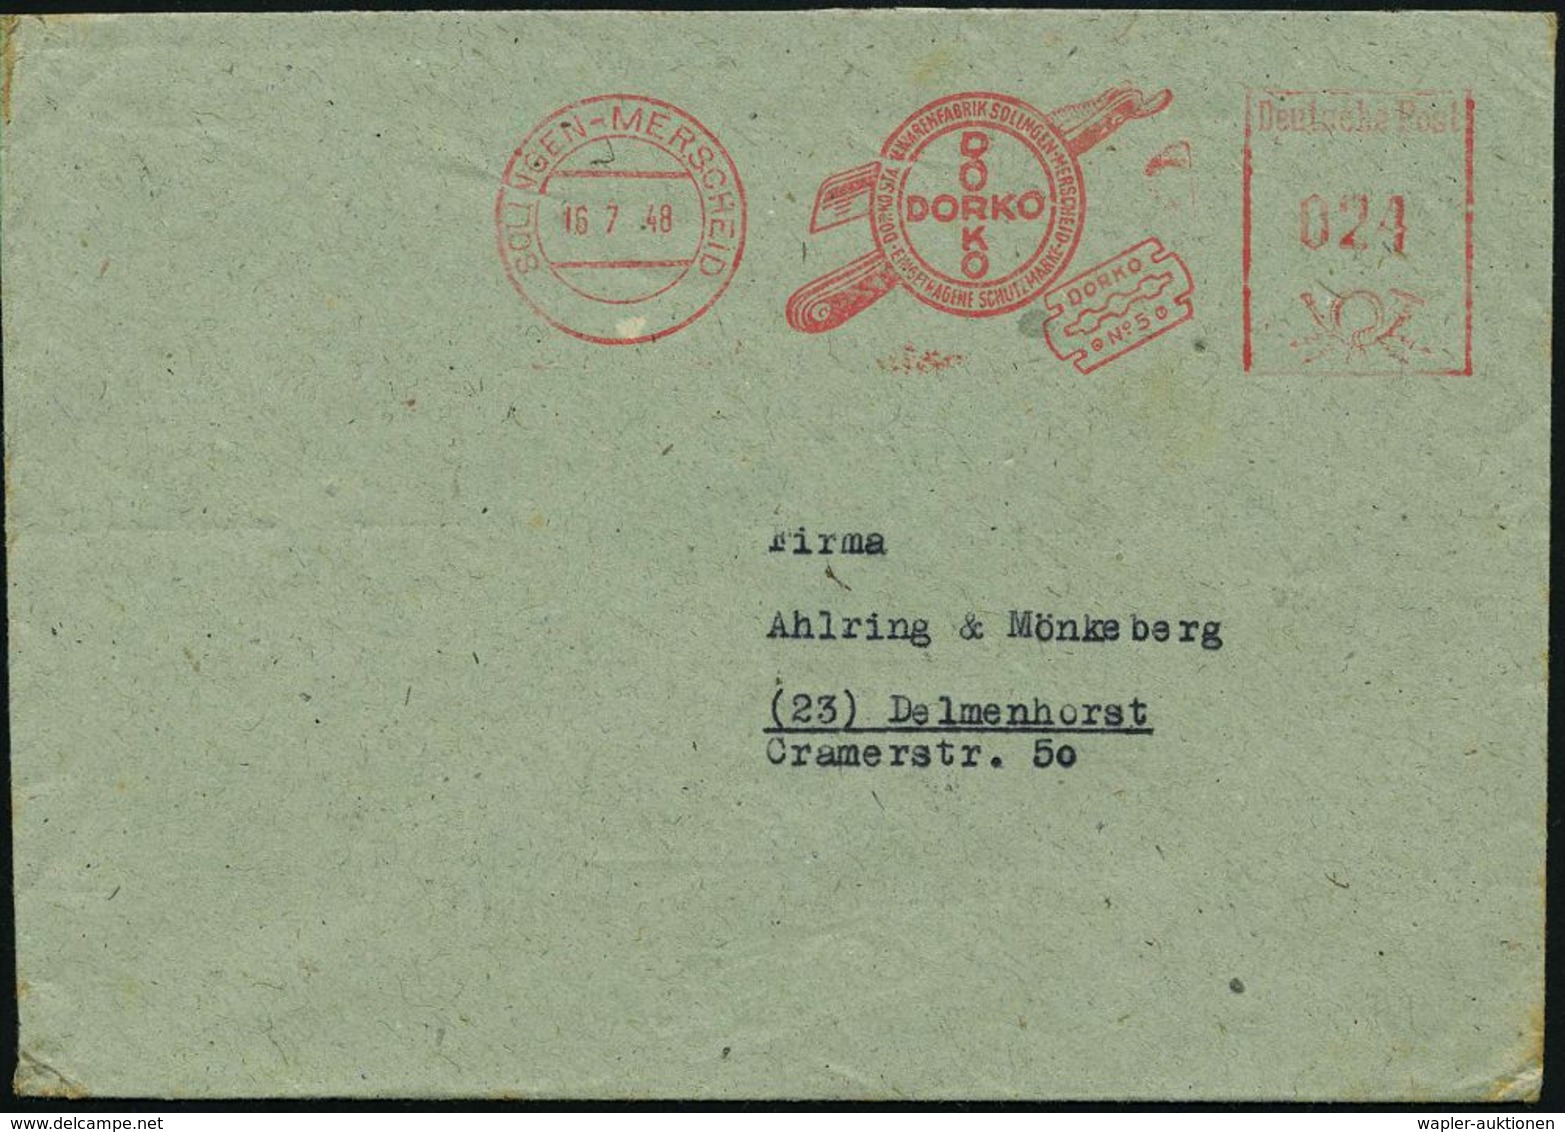 HAAR / BART / RASUR / FRISEUR : SOLINGEN-MERSCHEID/ DORKO STAHLWARENFABRIK.. 1948 (16.7.) AFS = Klapp-Rasiermesse (u. Ra - Farmacia